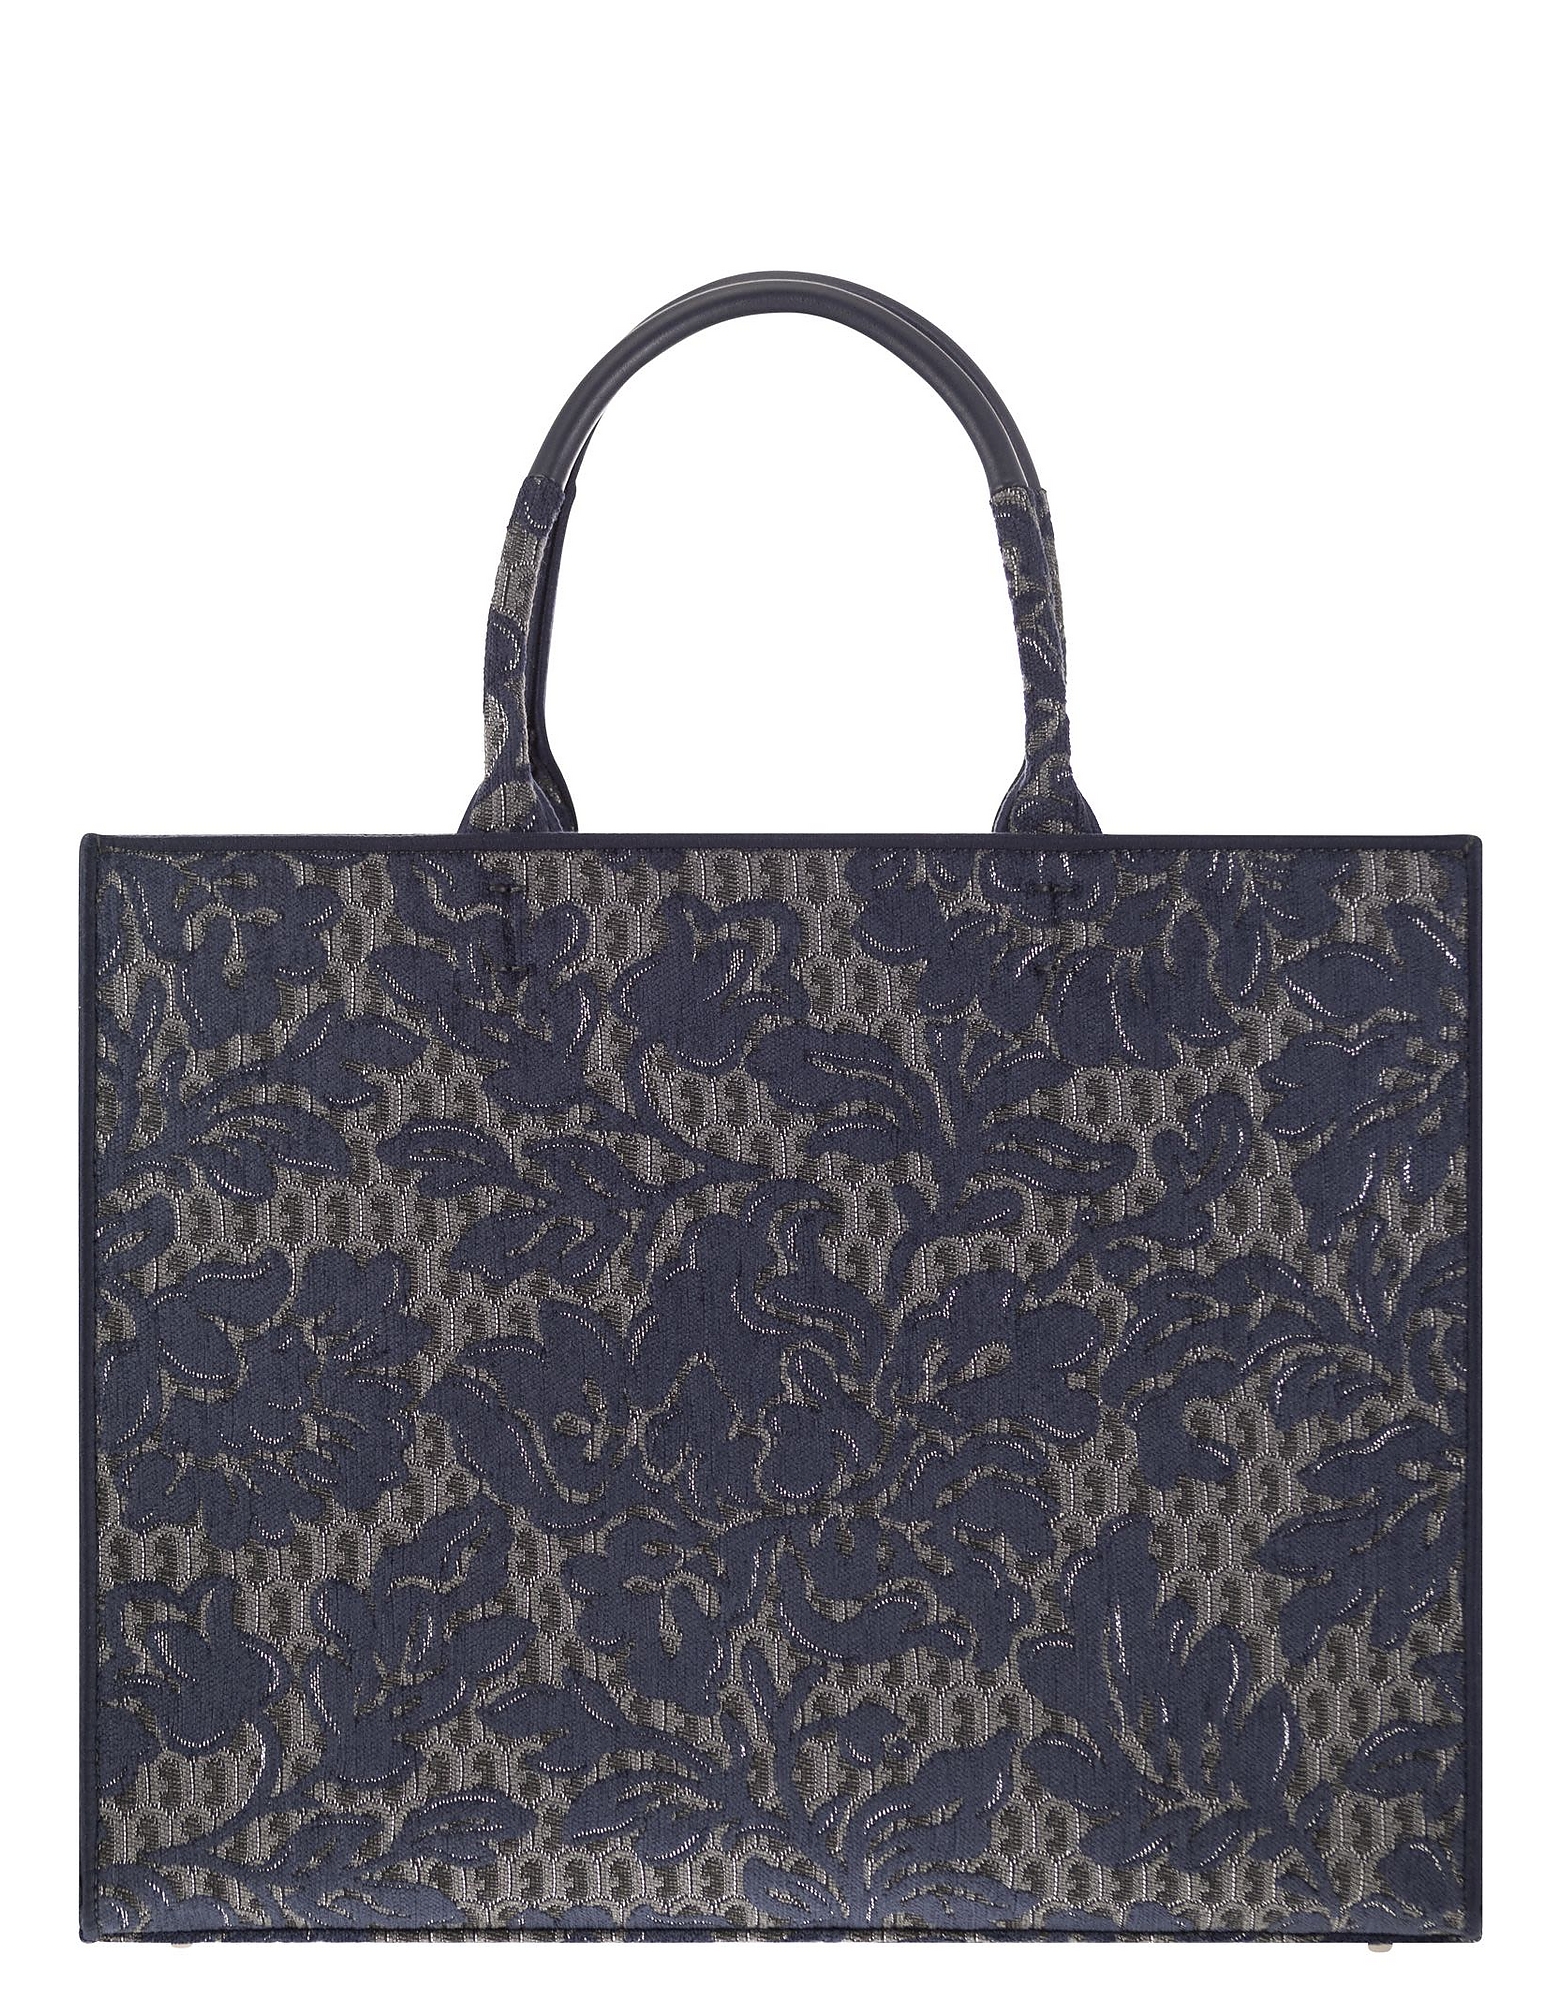 Furla Designer Handbags Opportunity - Tote Bag In Blue